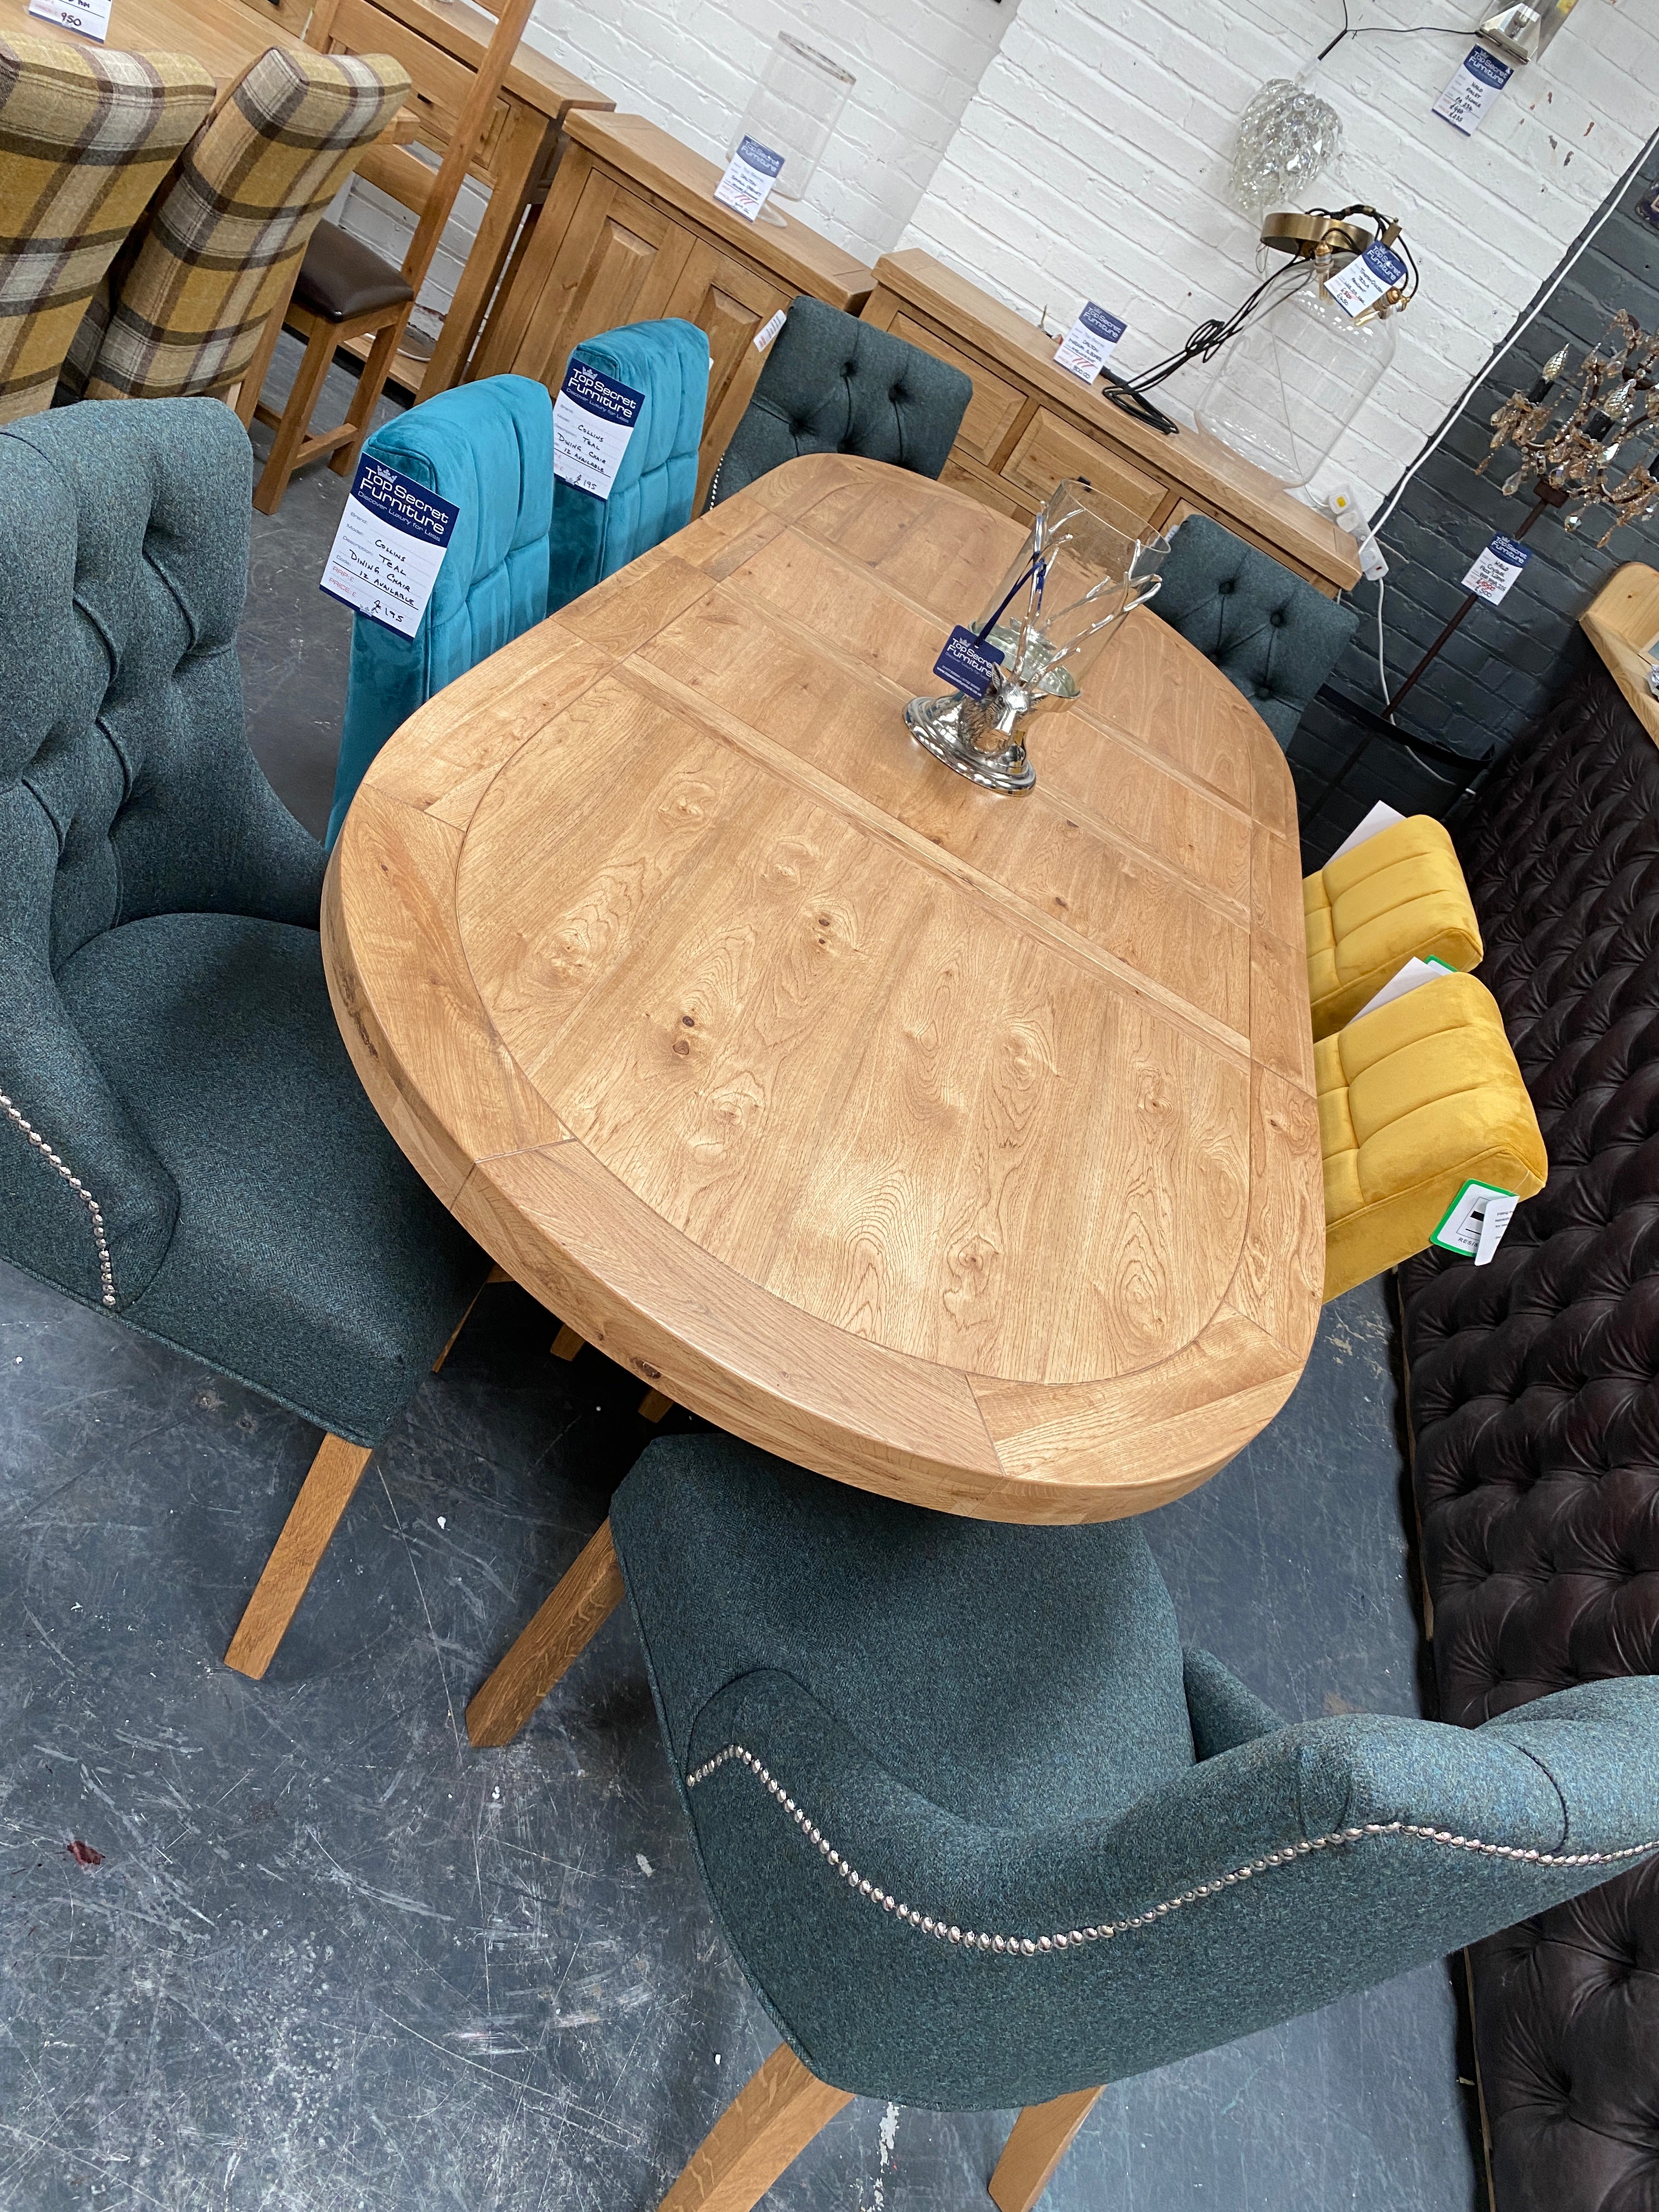 100% solid oak furniture Dalton Oval Extending Dining Table from Top Secret Furniture